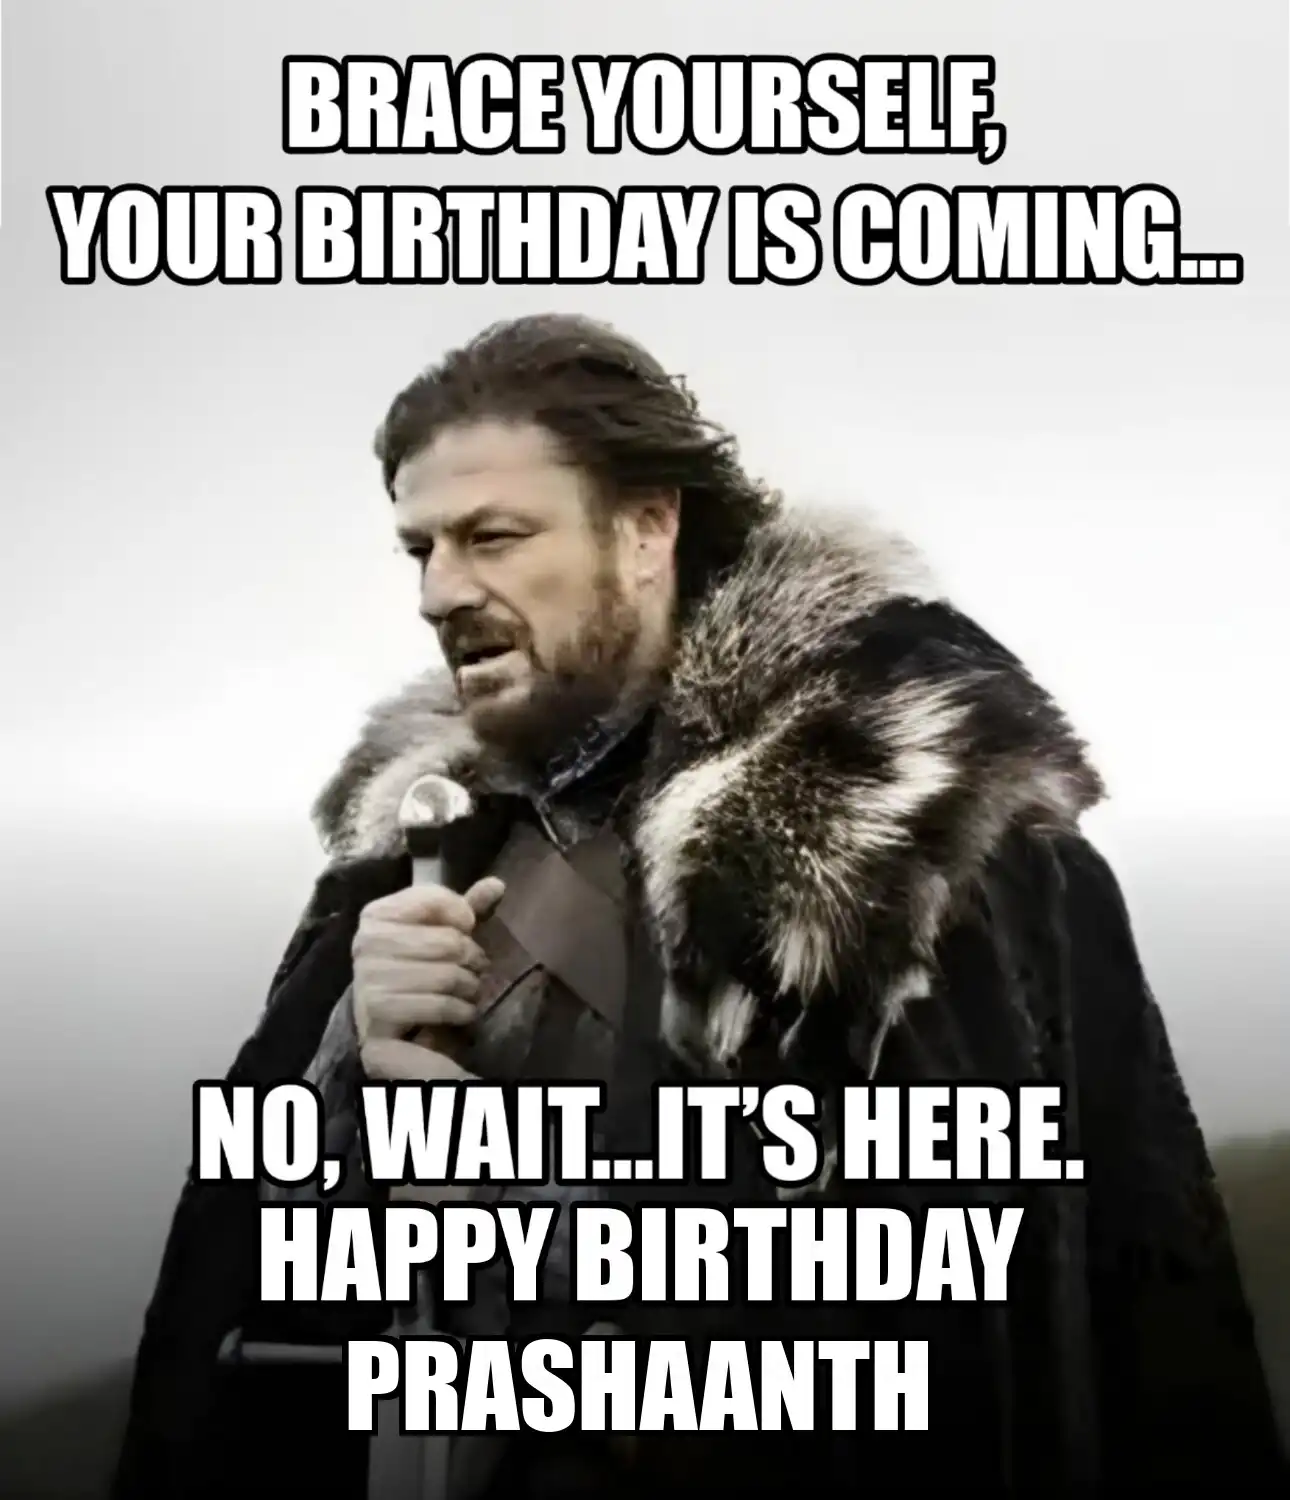 Happy Birthday Prashaanth Brace Yourself Your Birthday Is Coming Meme